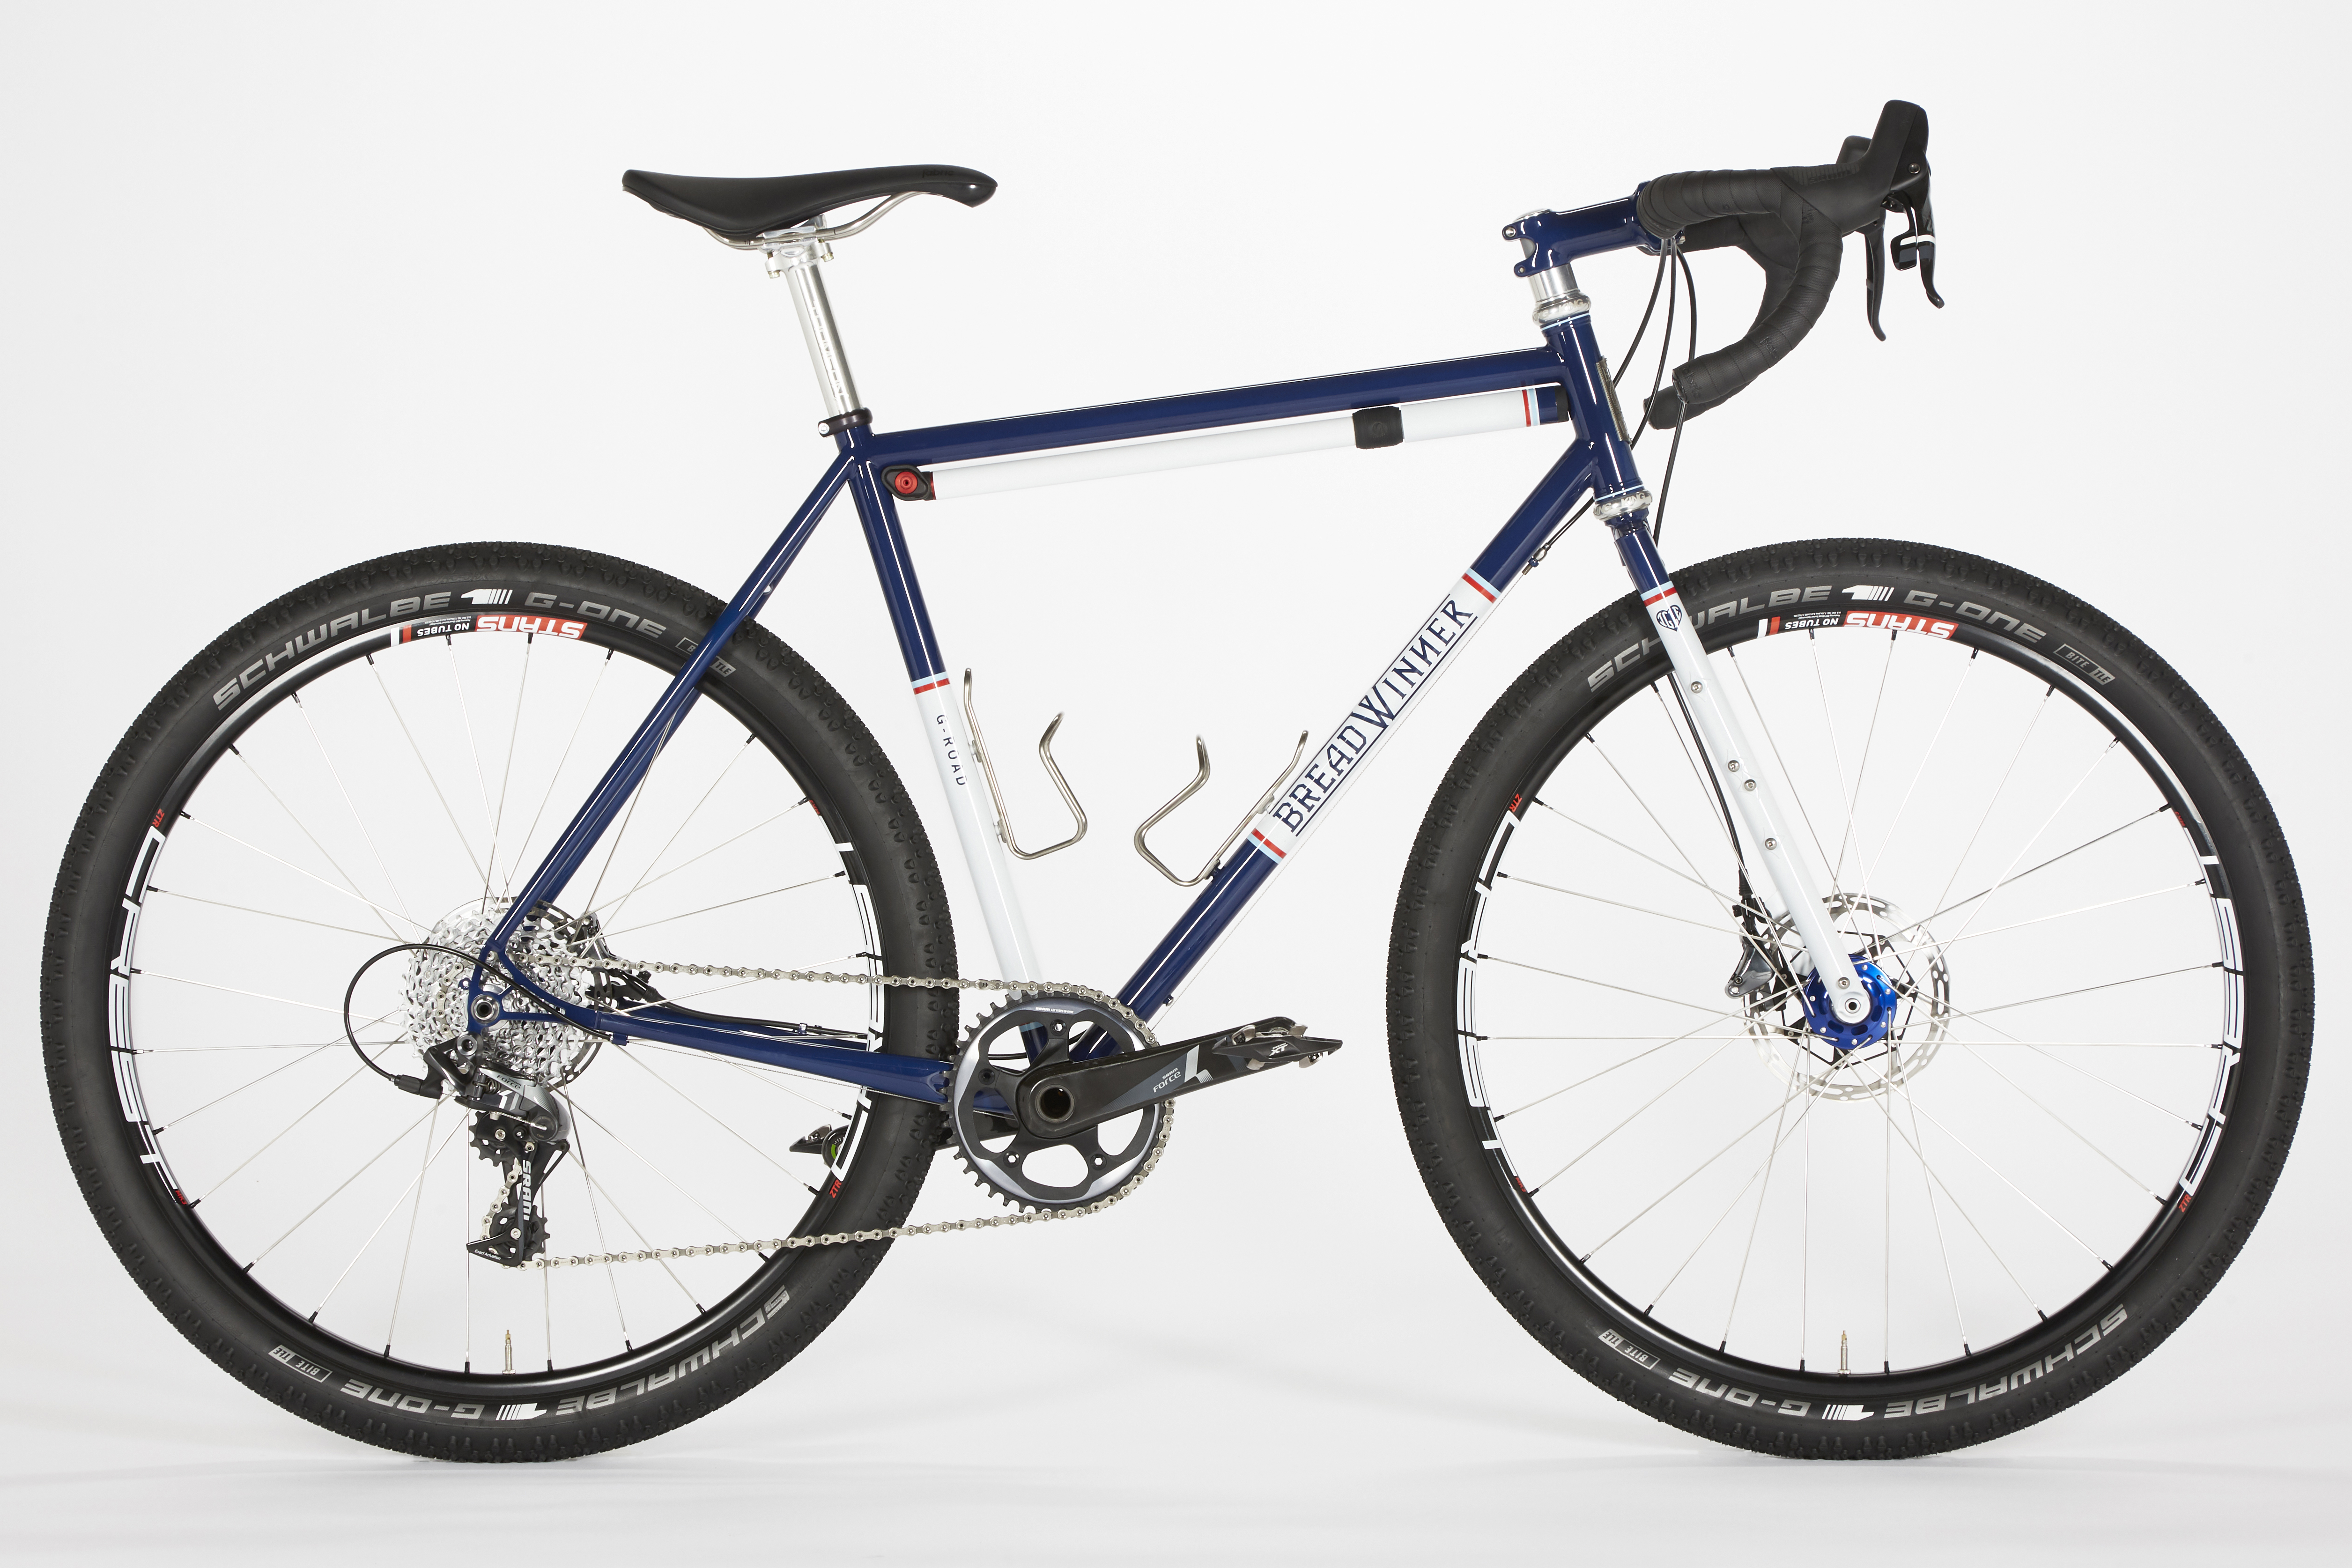 breadwinner cycles g road gravel bike custom limited edition side view